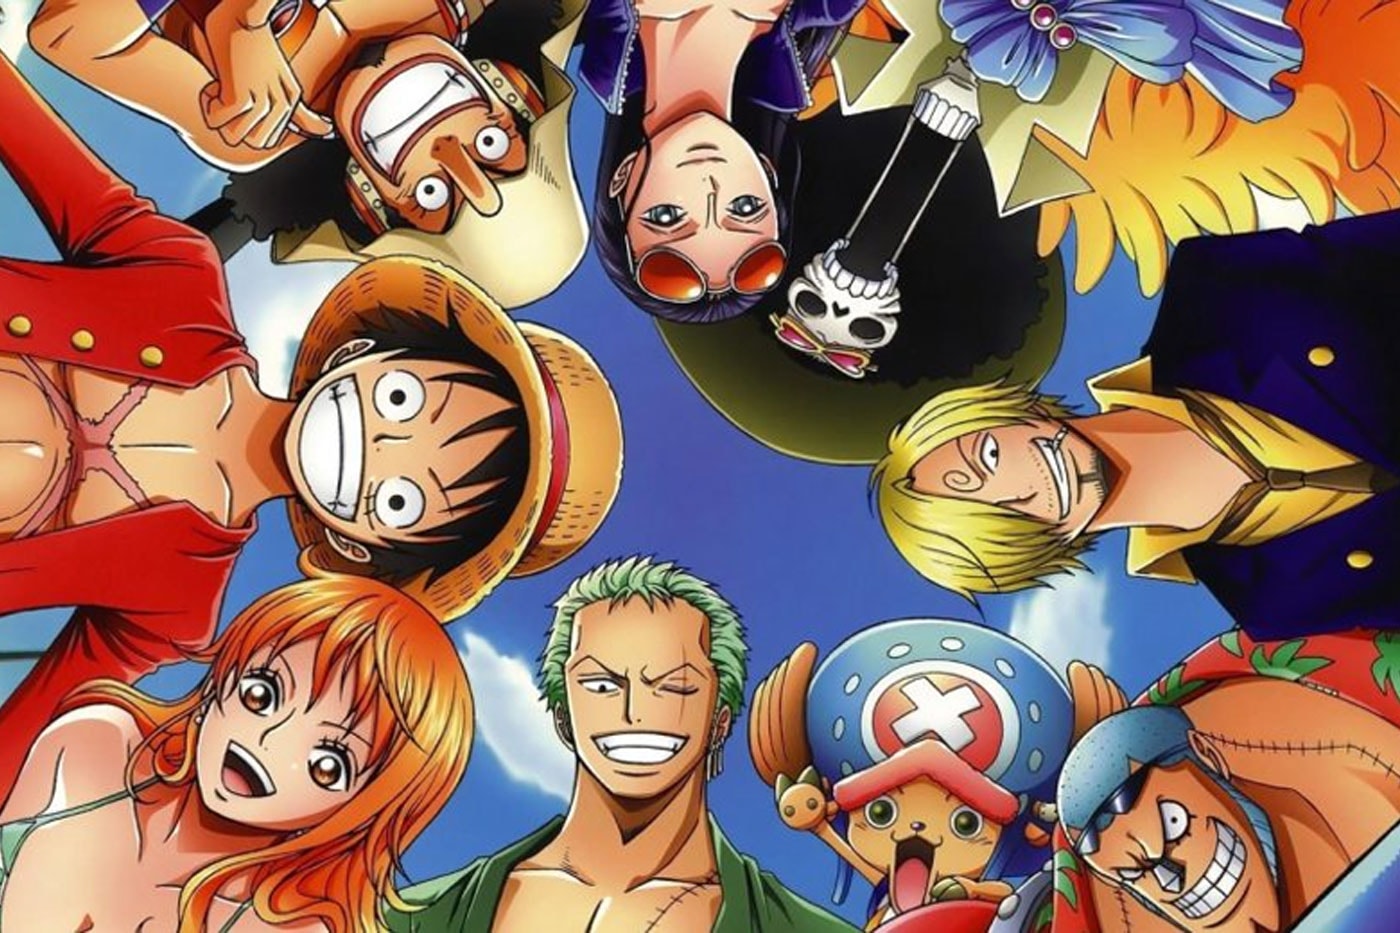 One Piece' Celebrates 25 Years With New Nostalgic Logo